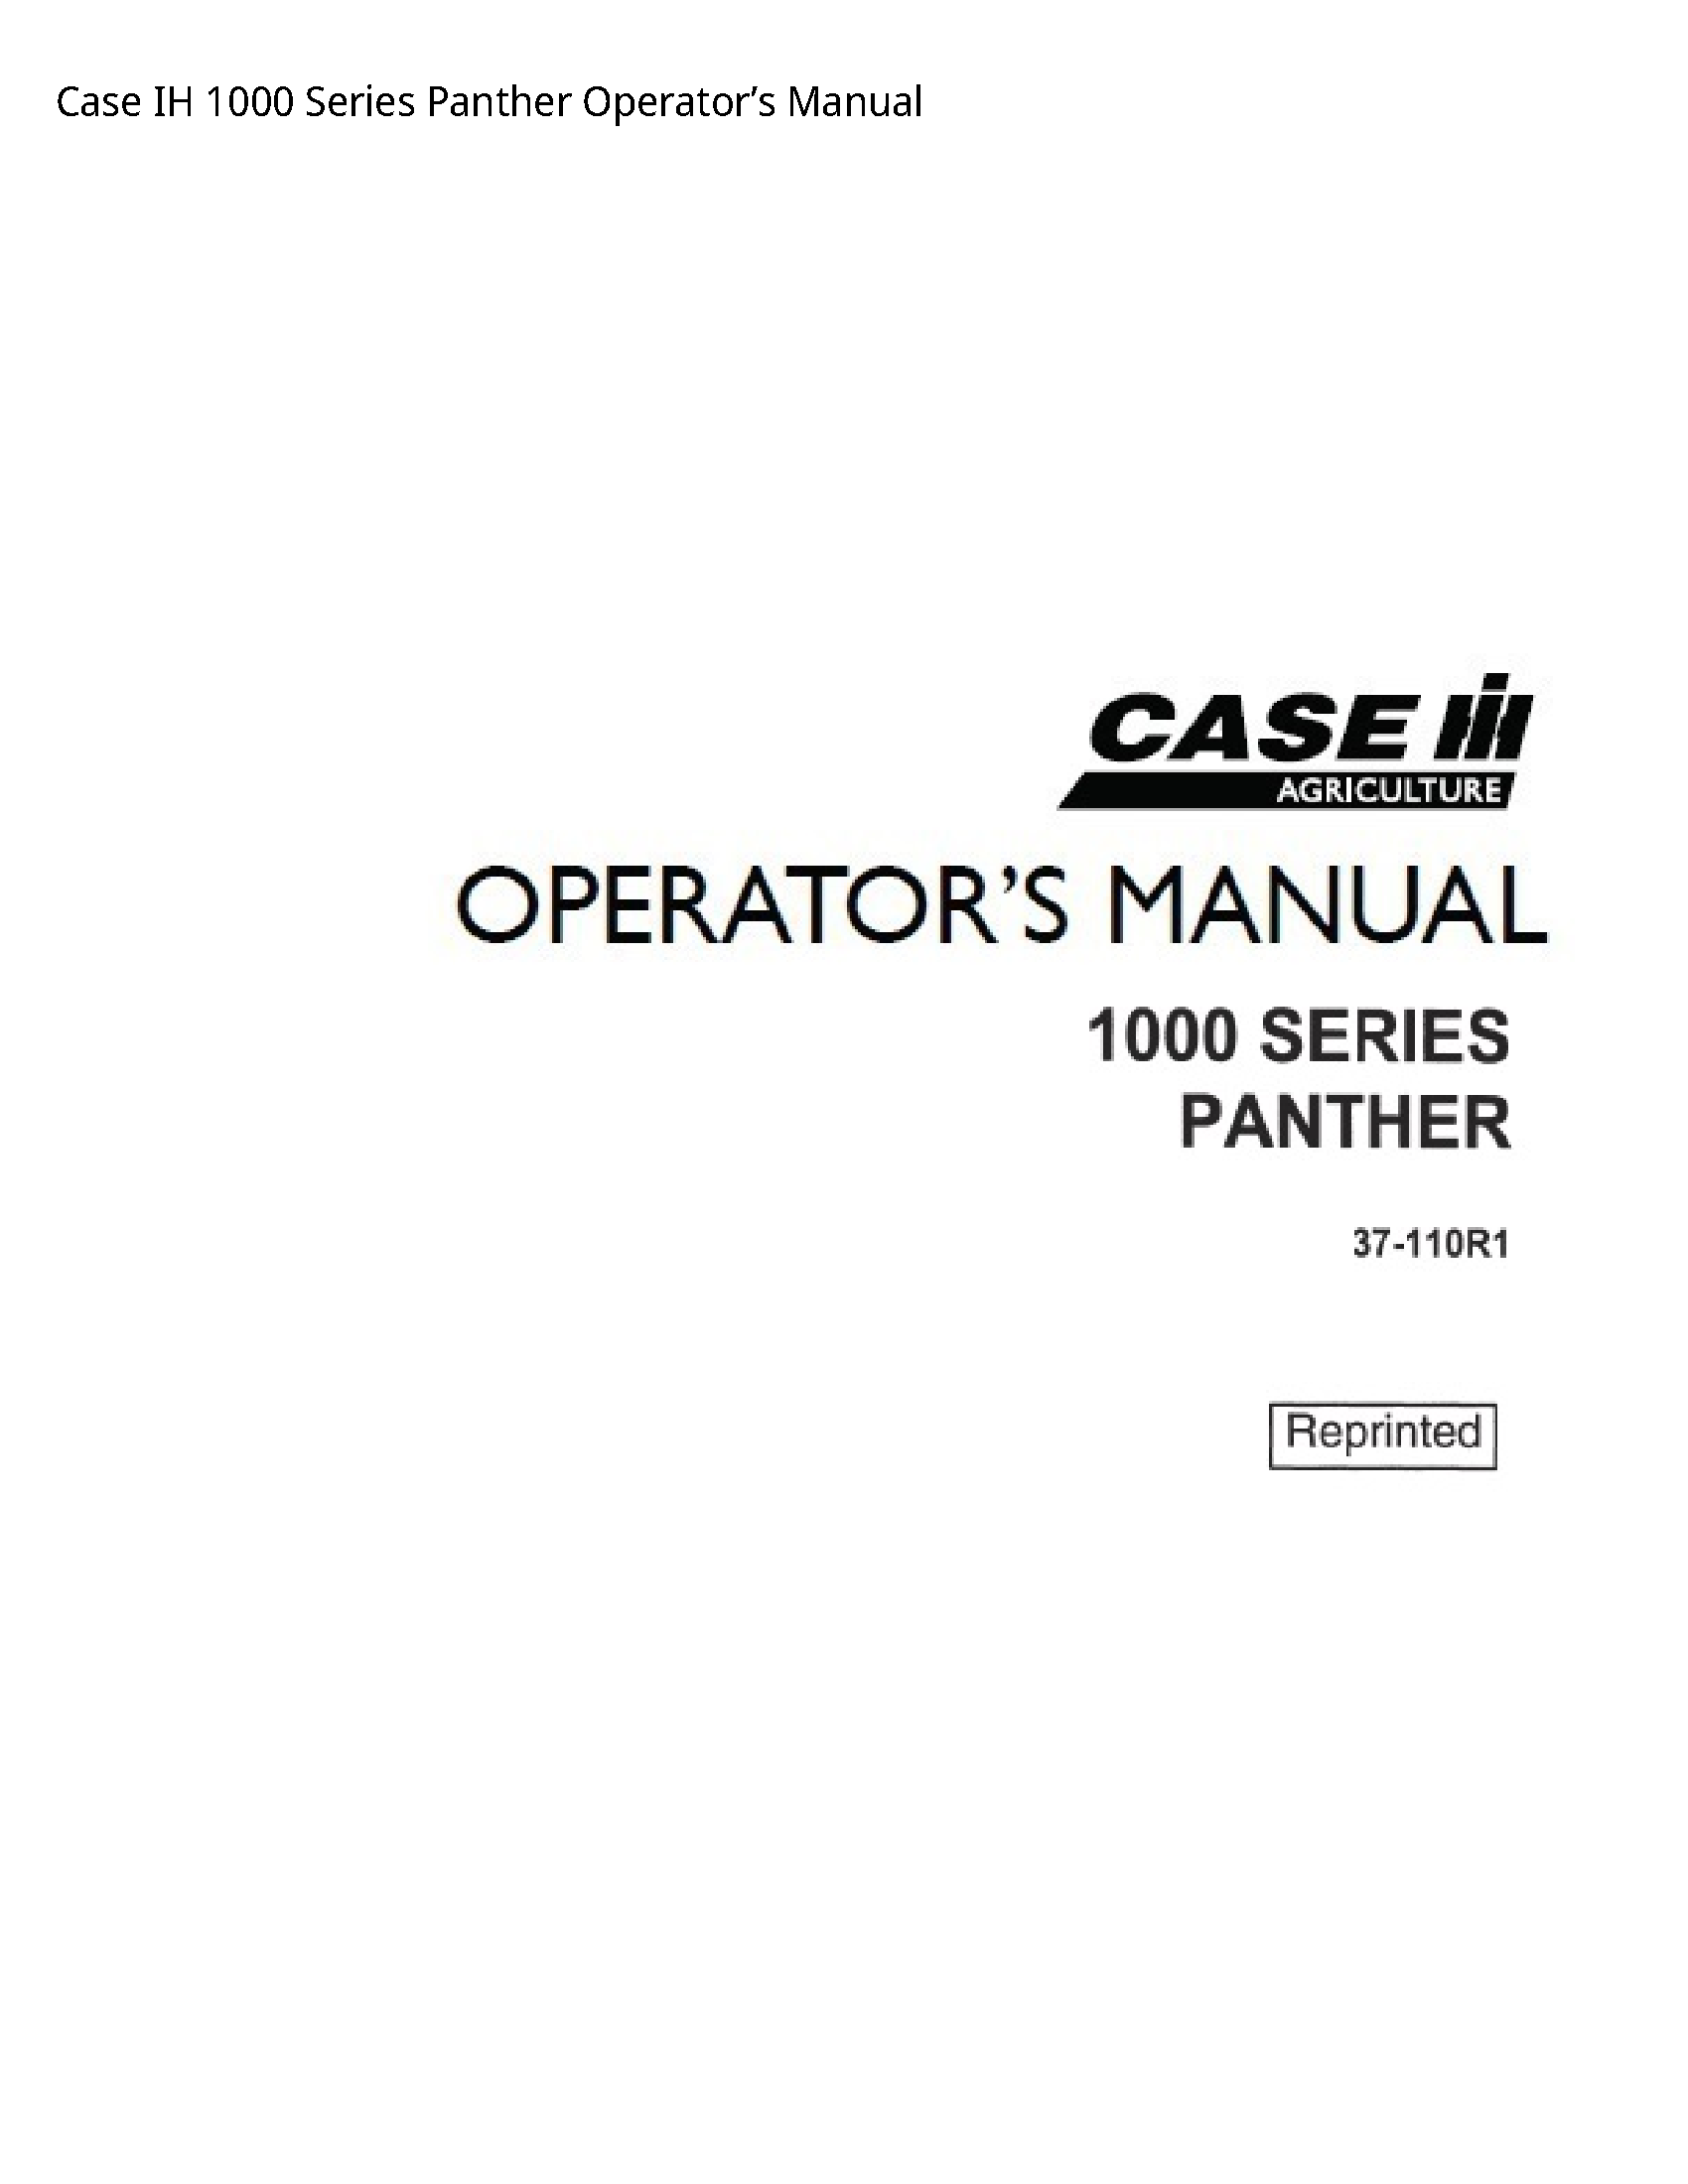 Case/Case IH 1000 IH Series Panther Operator’s manual